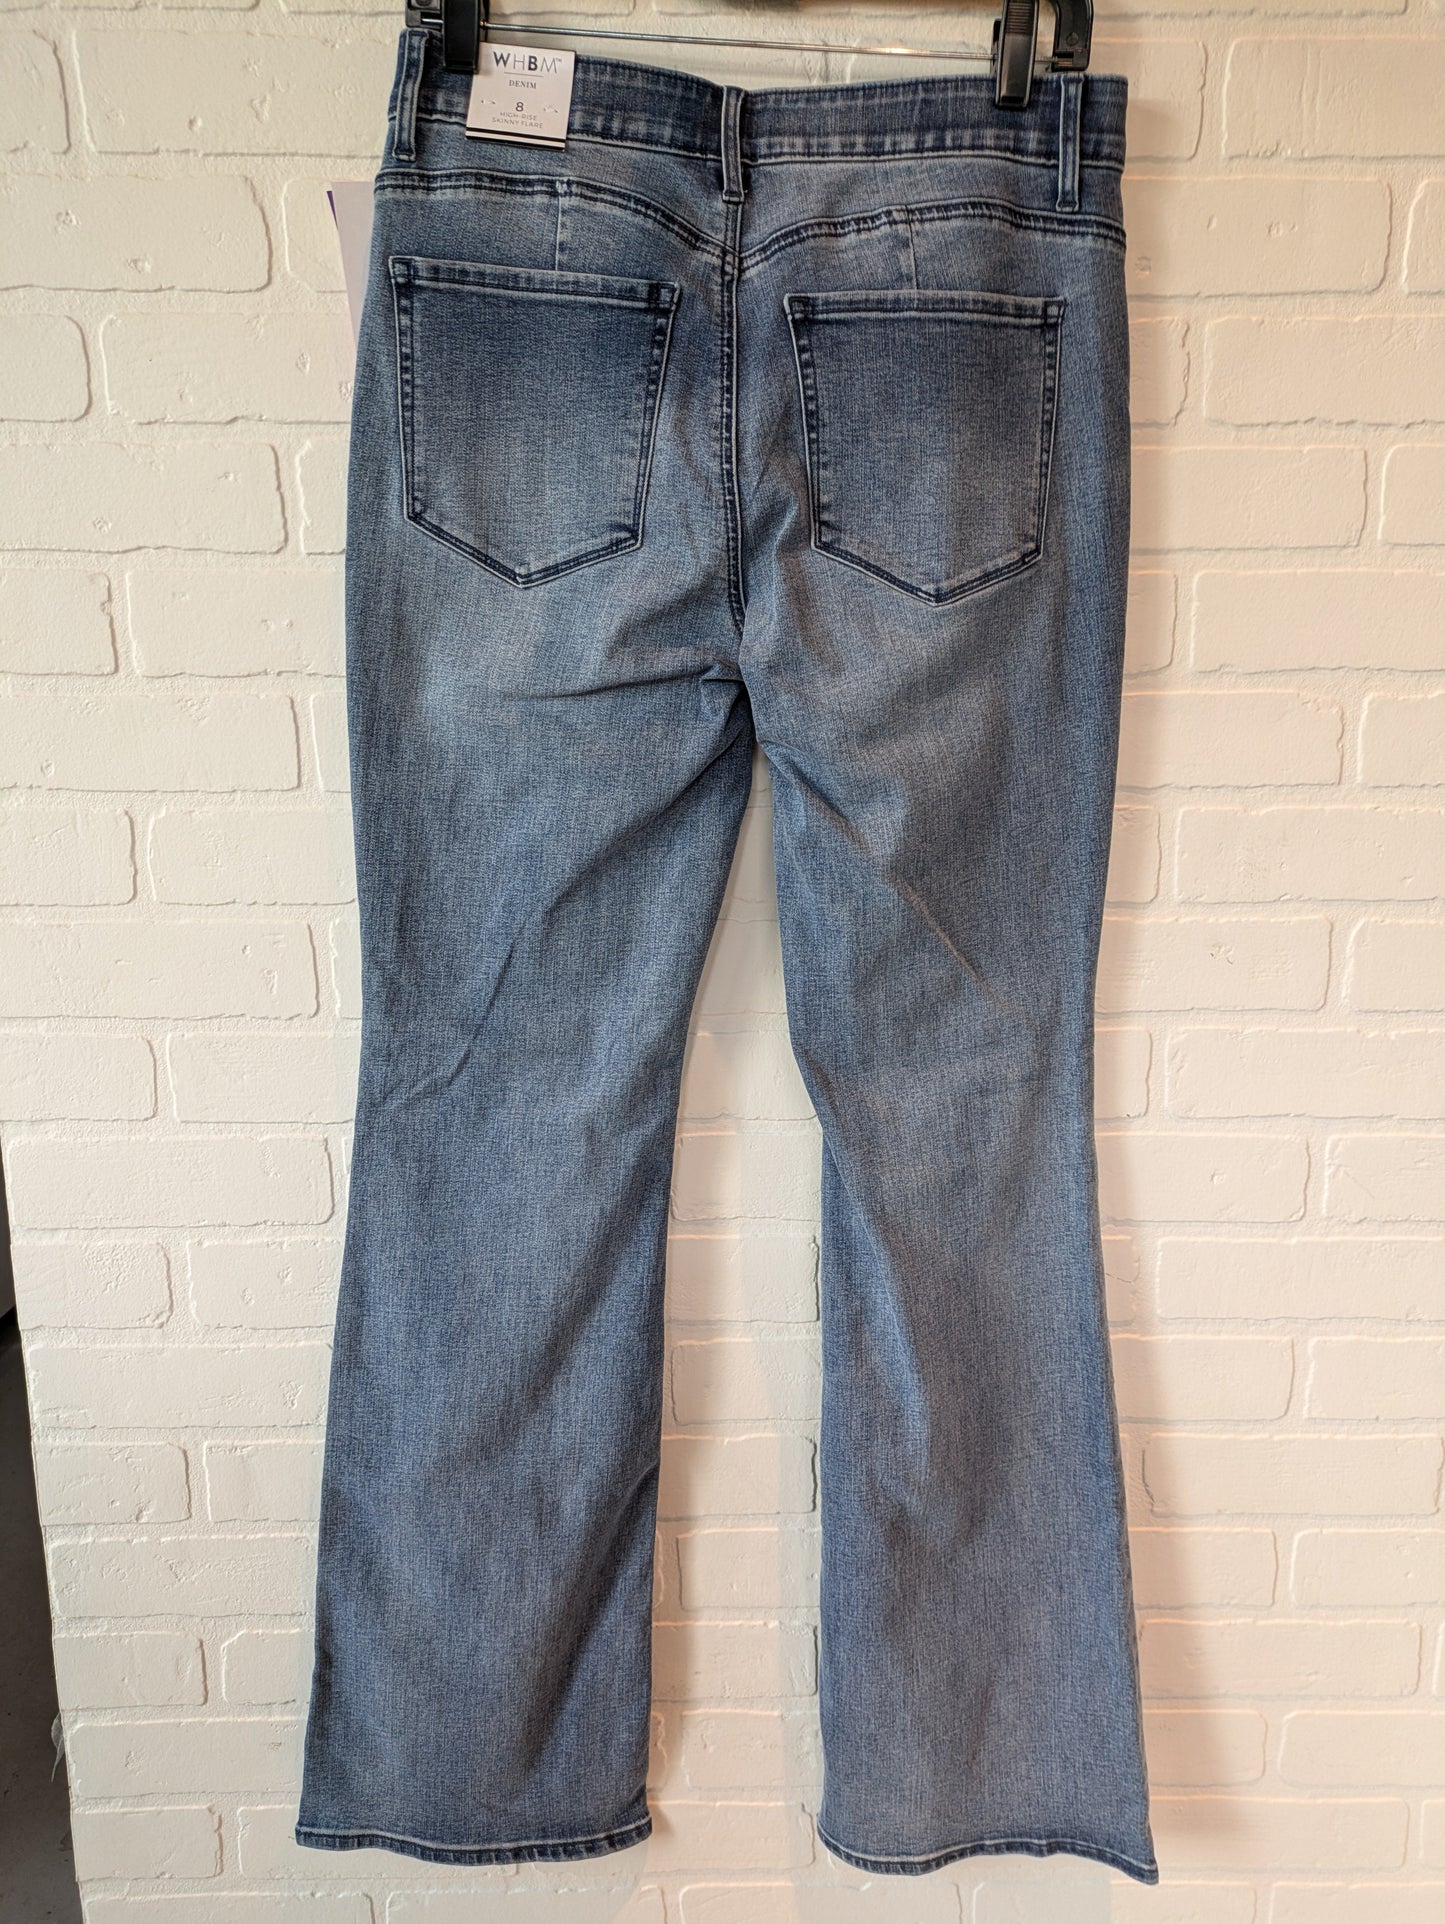 Blue Denim Jeans Flared White House Black Market, Size 8